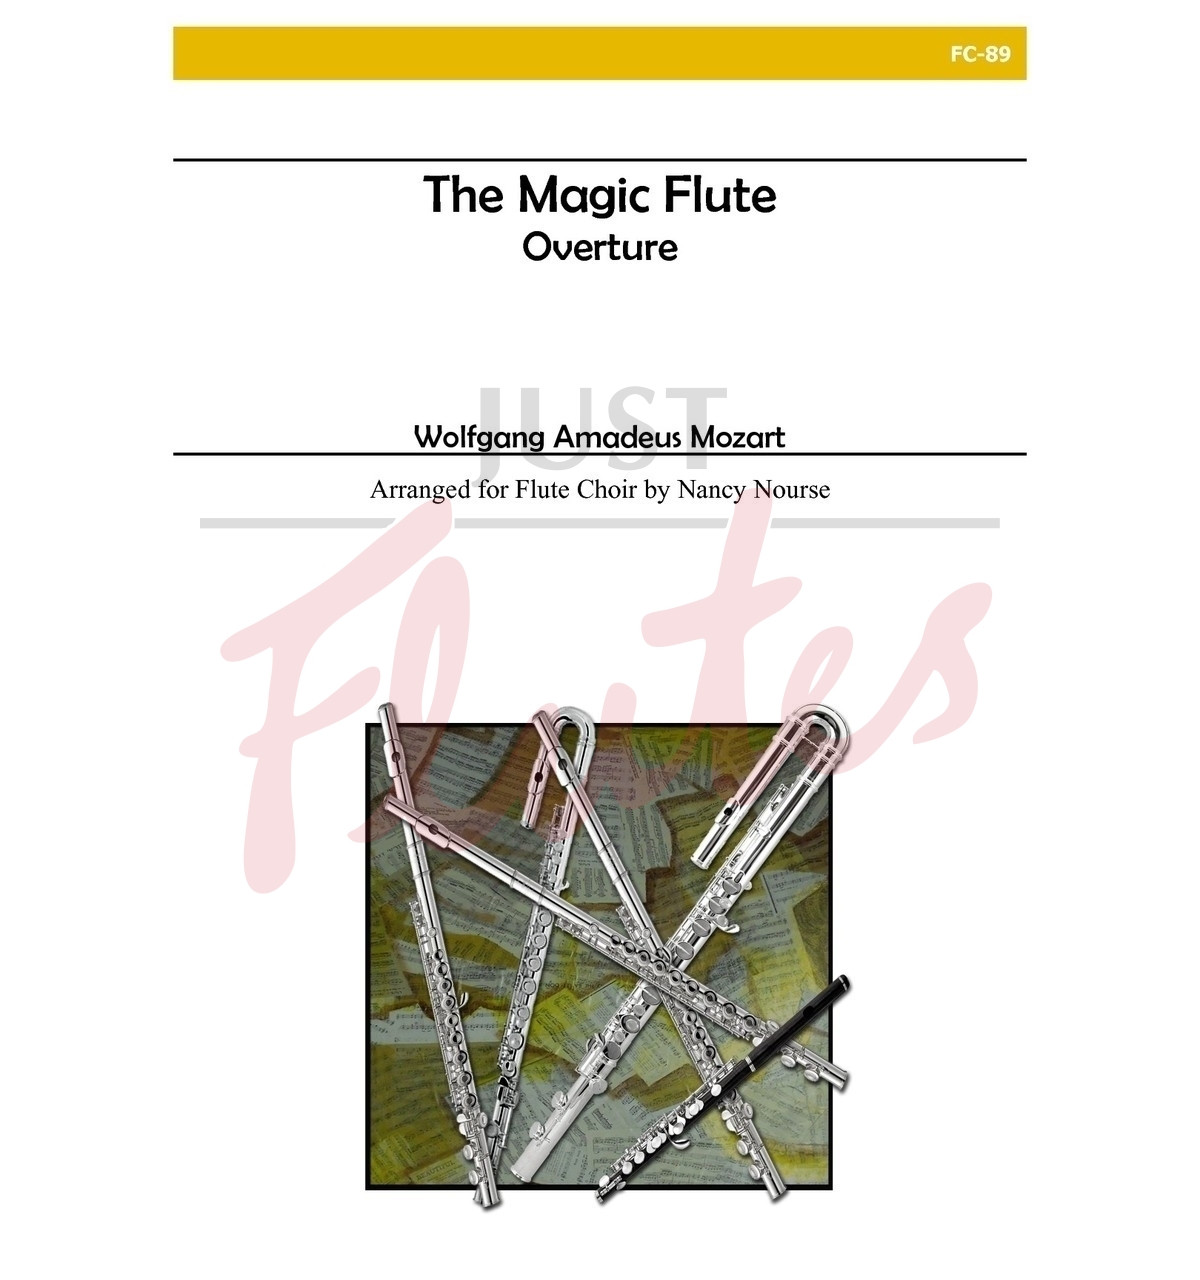 The Magic Flute Overture for Flute Choir